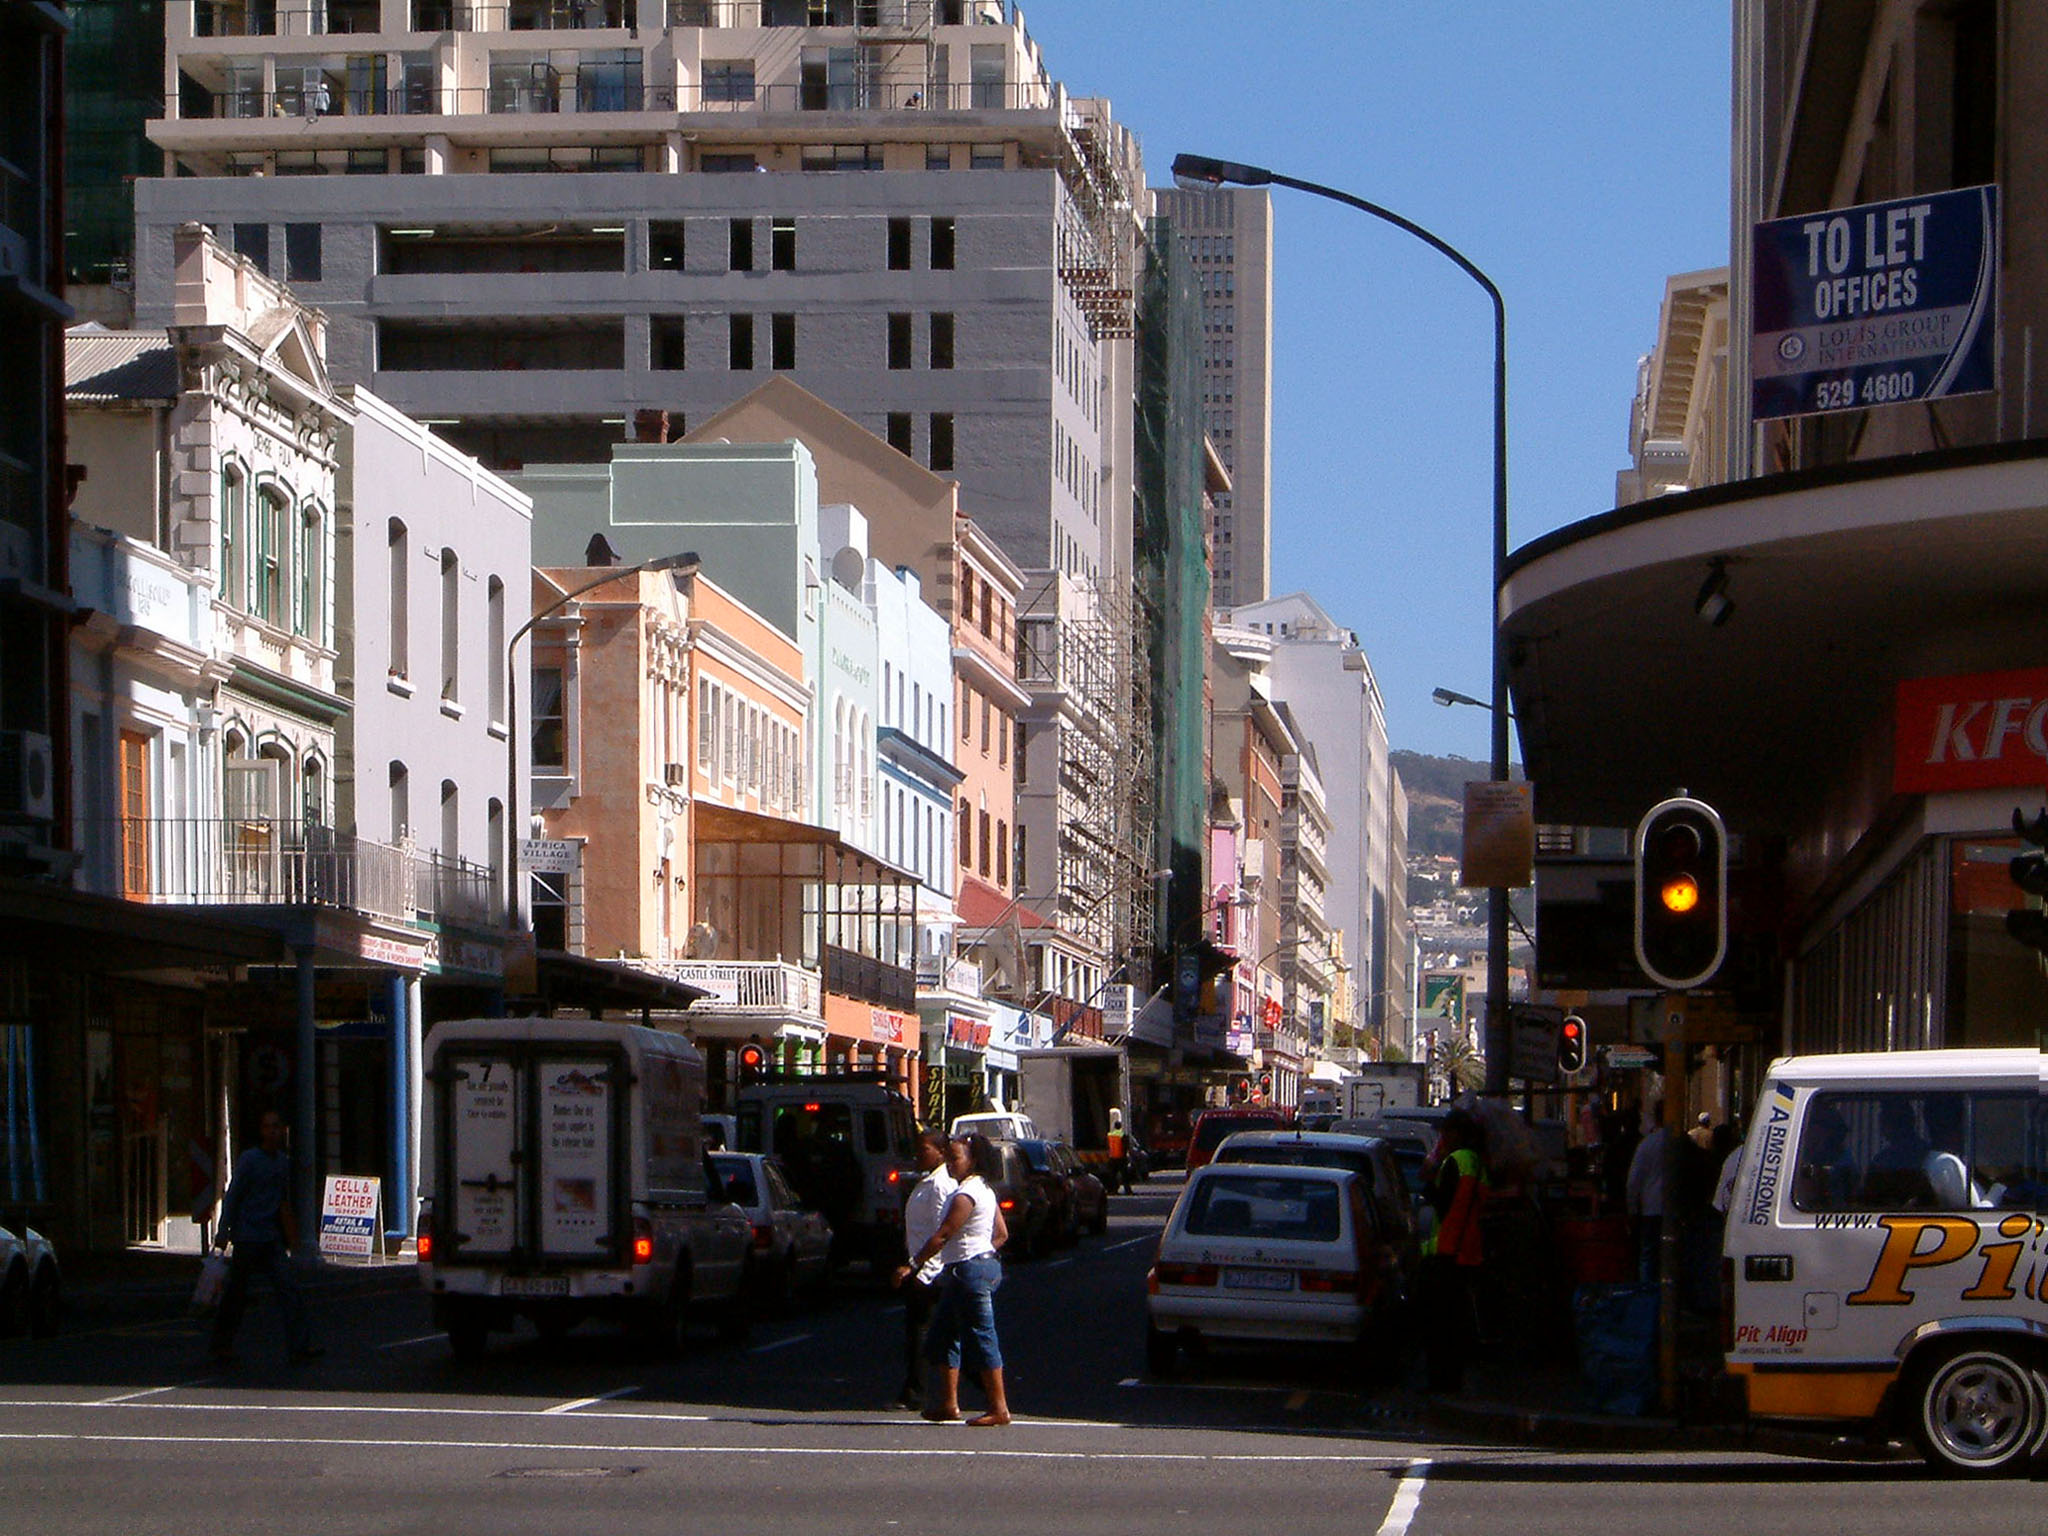 Long Street in Cape Town